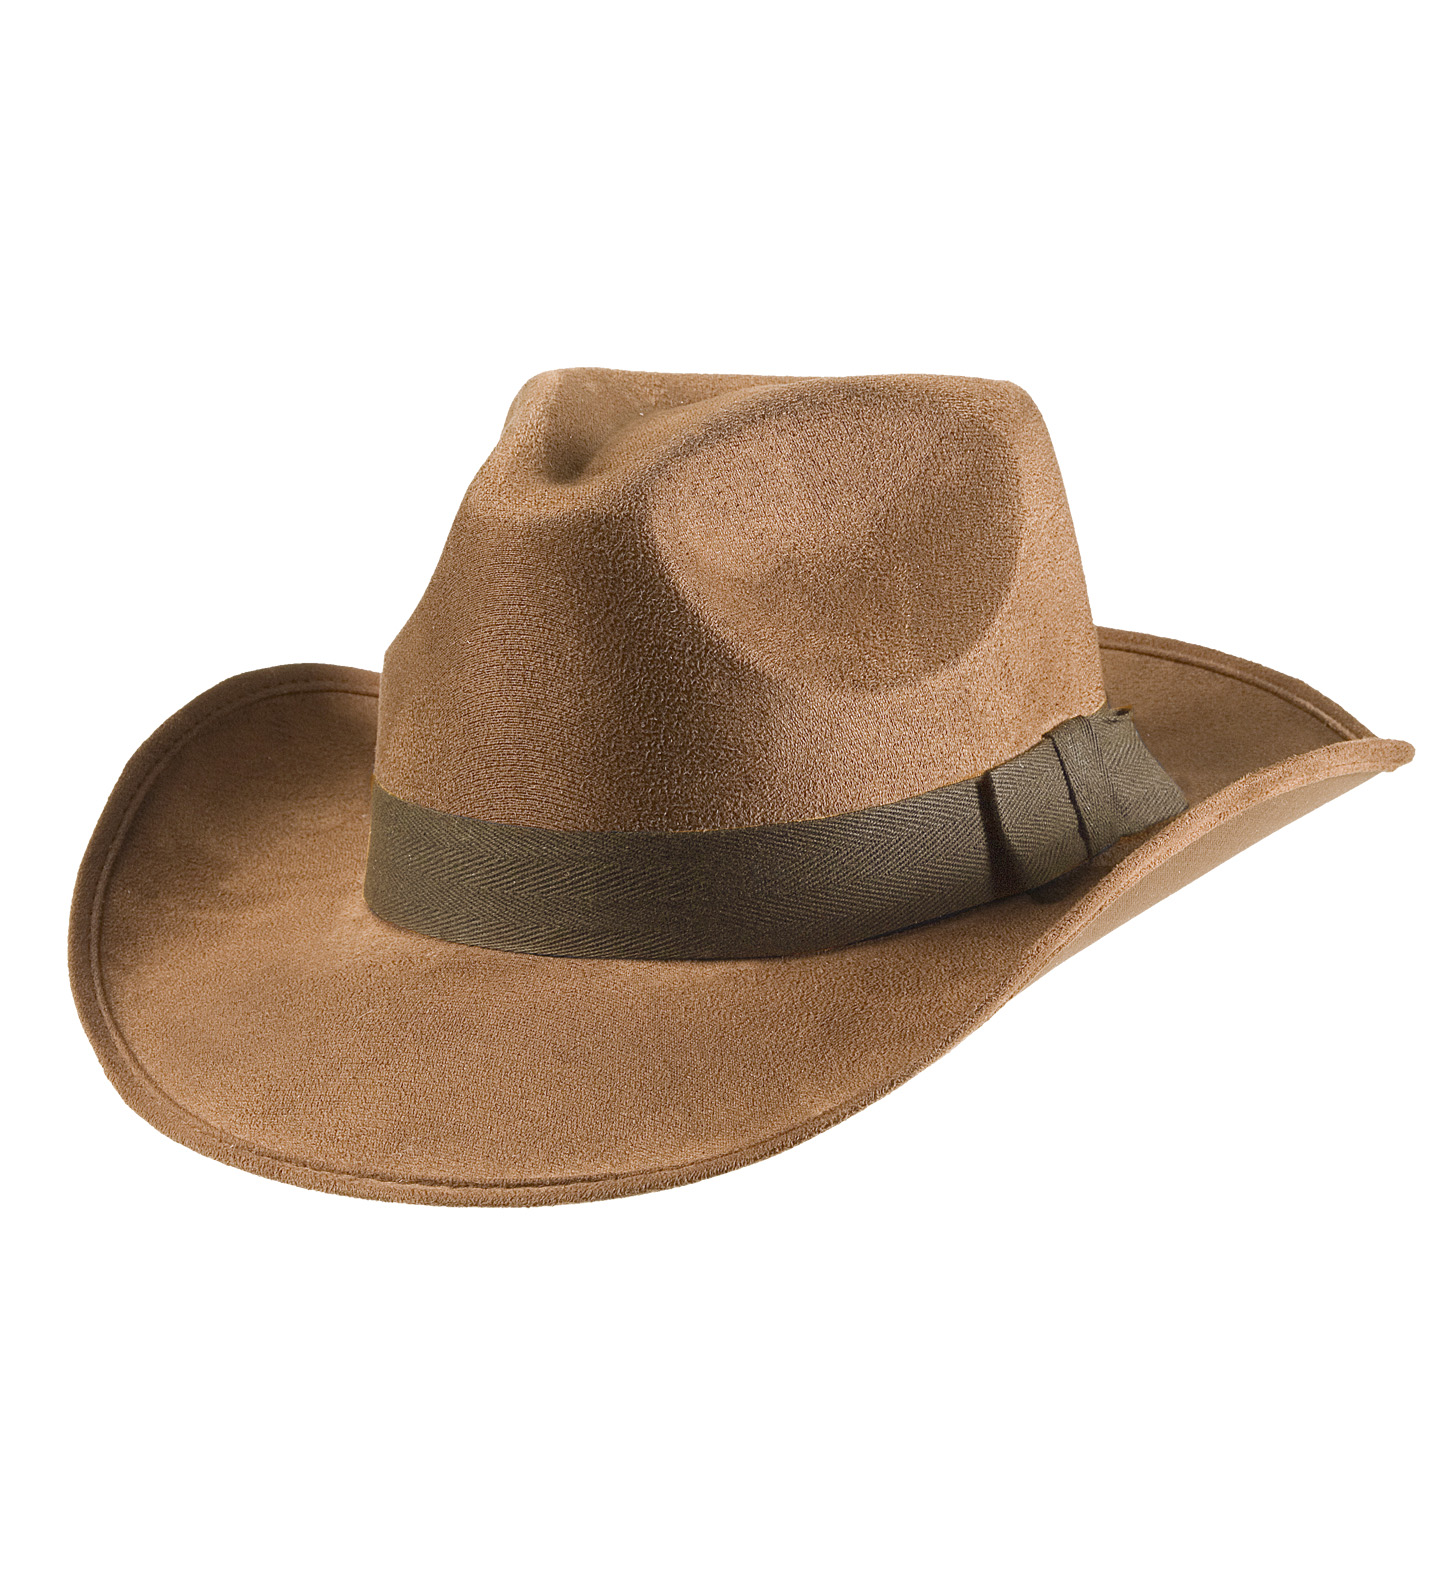 Шляпа Индианы Джонса. Панама Индиана Джонс. Шляпа археолога. Шляпа путешественника Индиана Джонс. Шляпа индианы